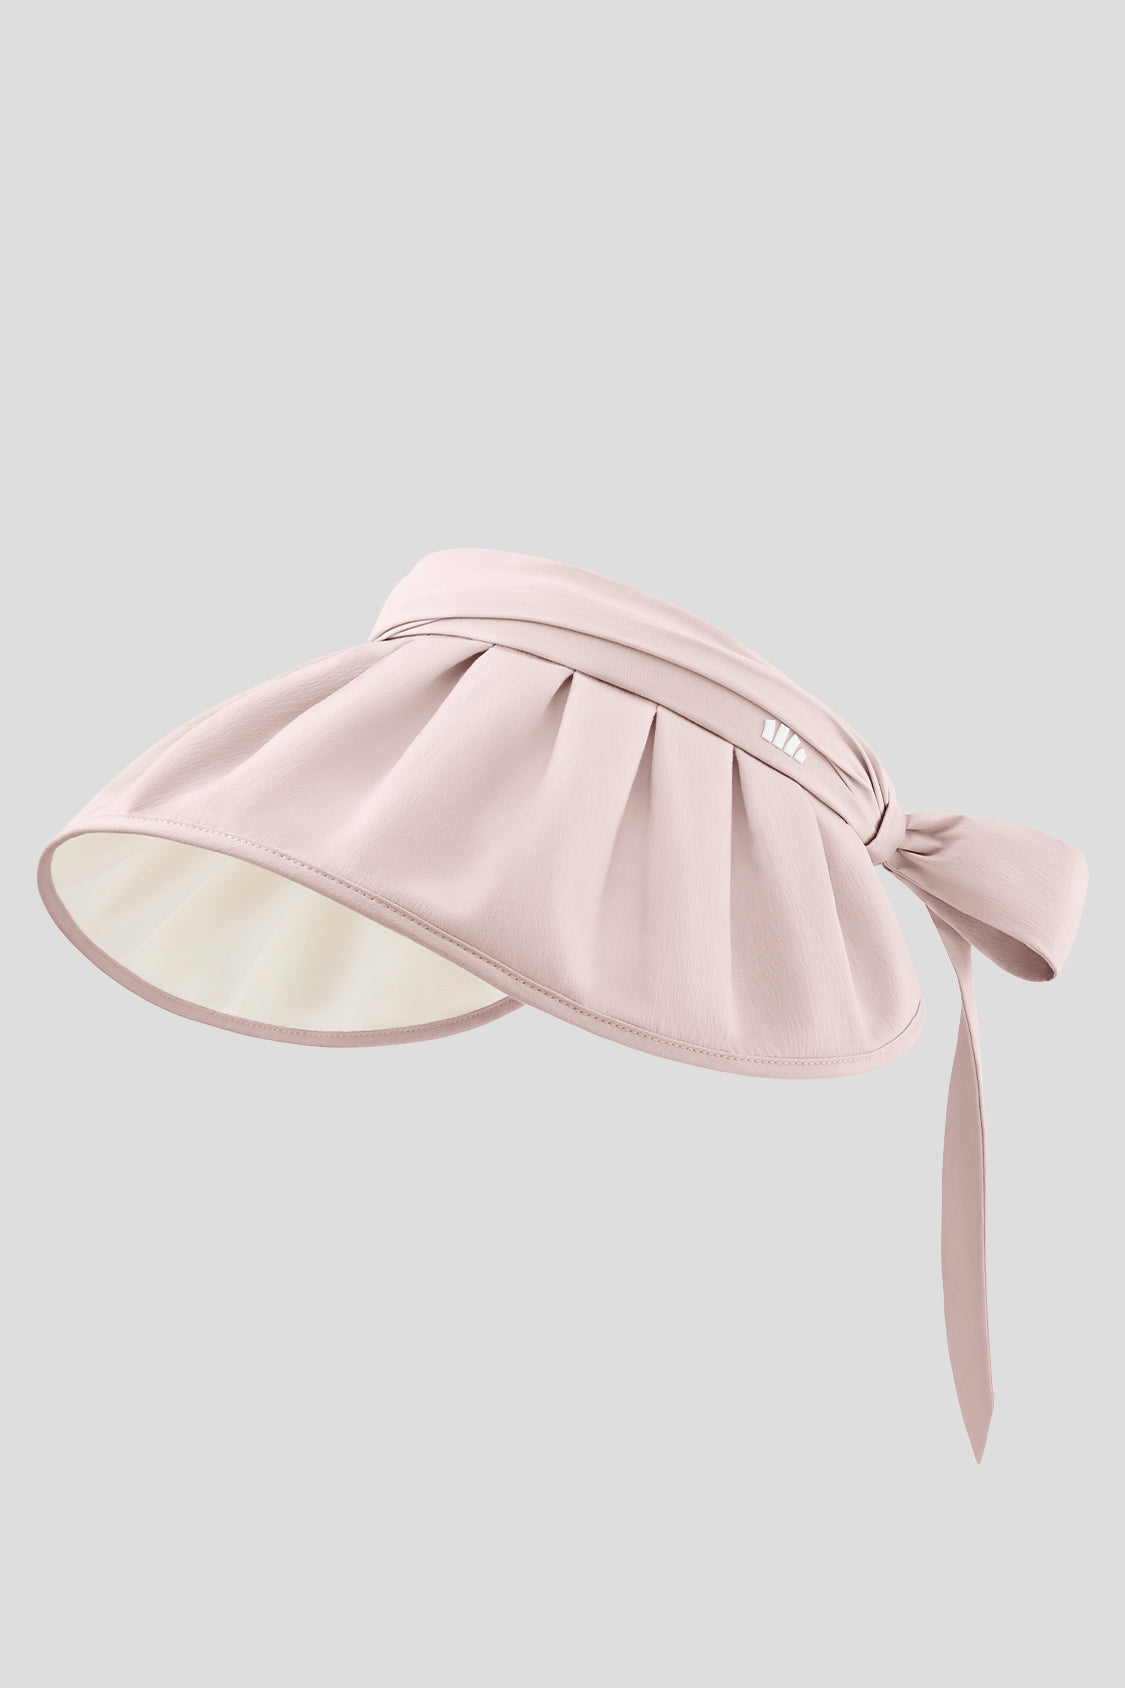 beneunder women's sun hats #color_cloud grey pink